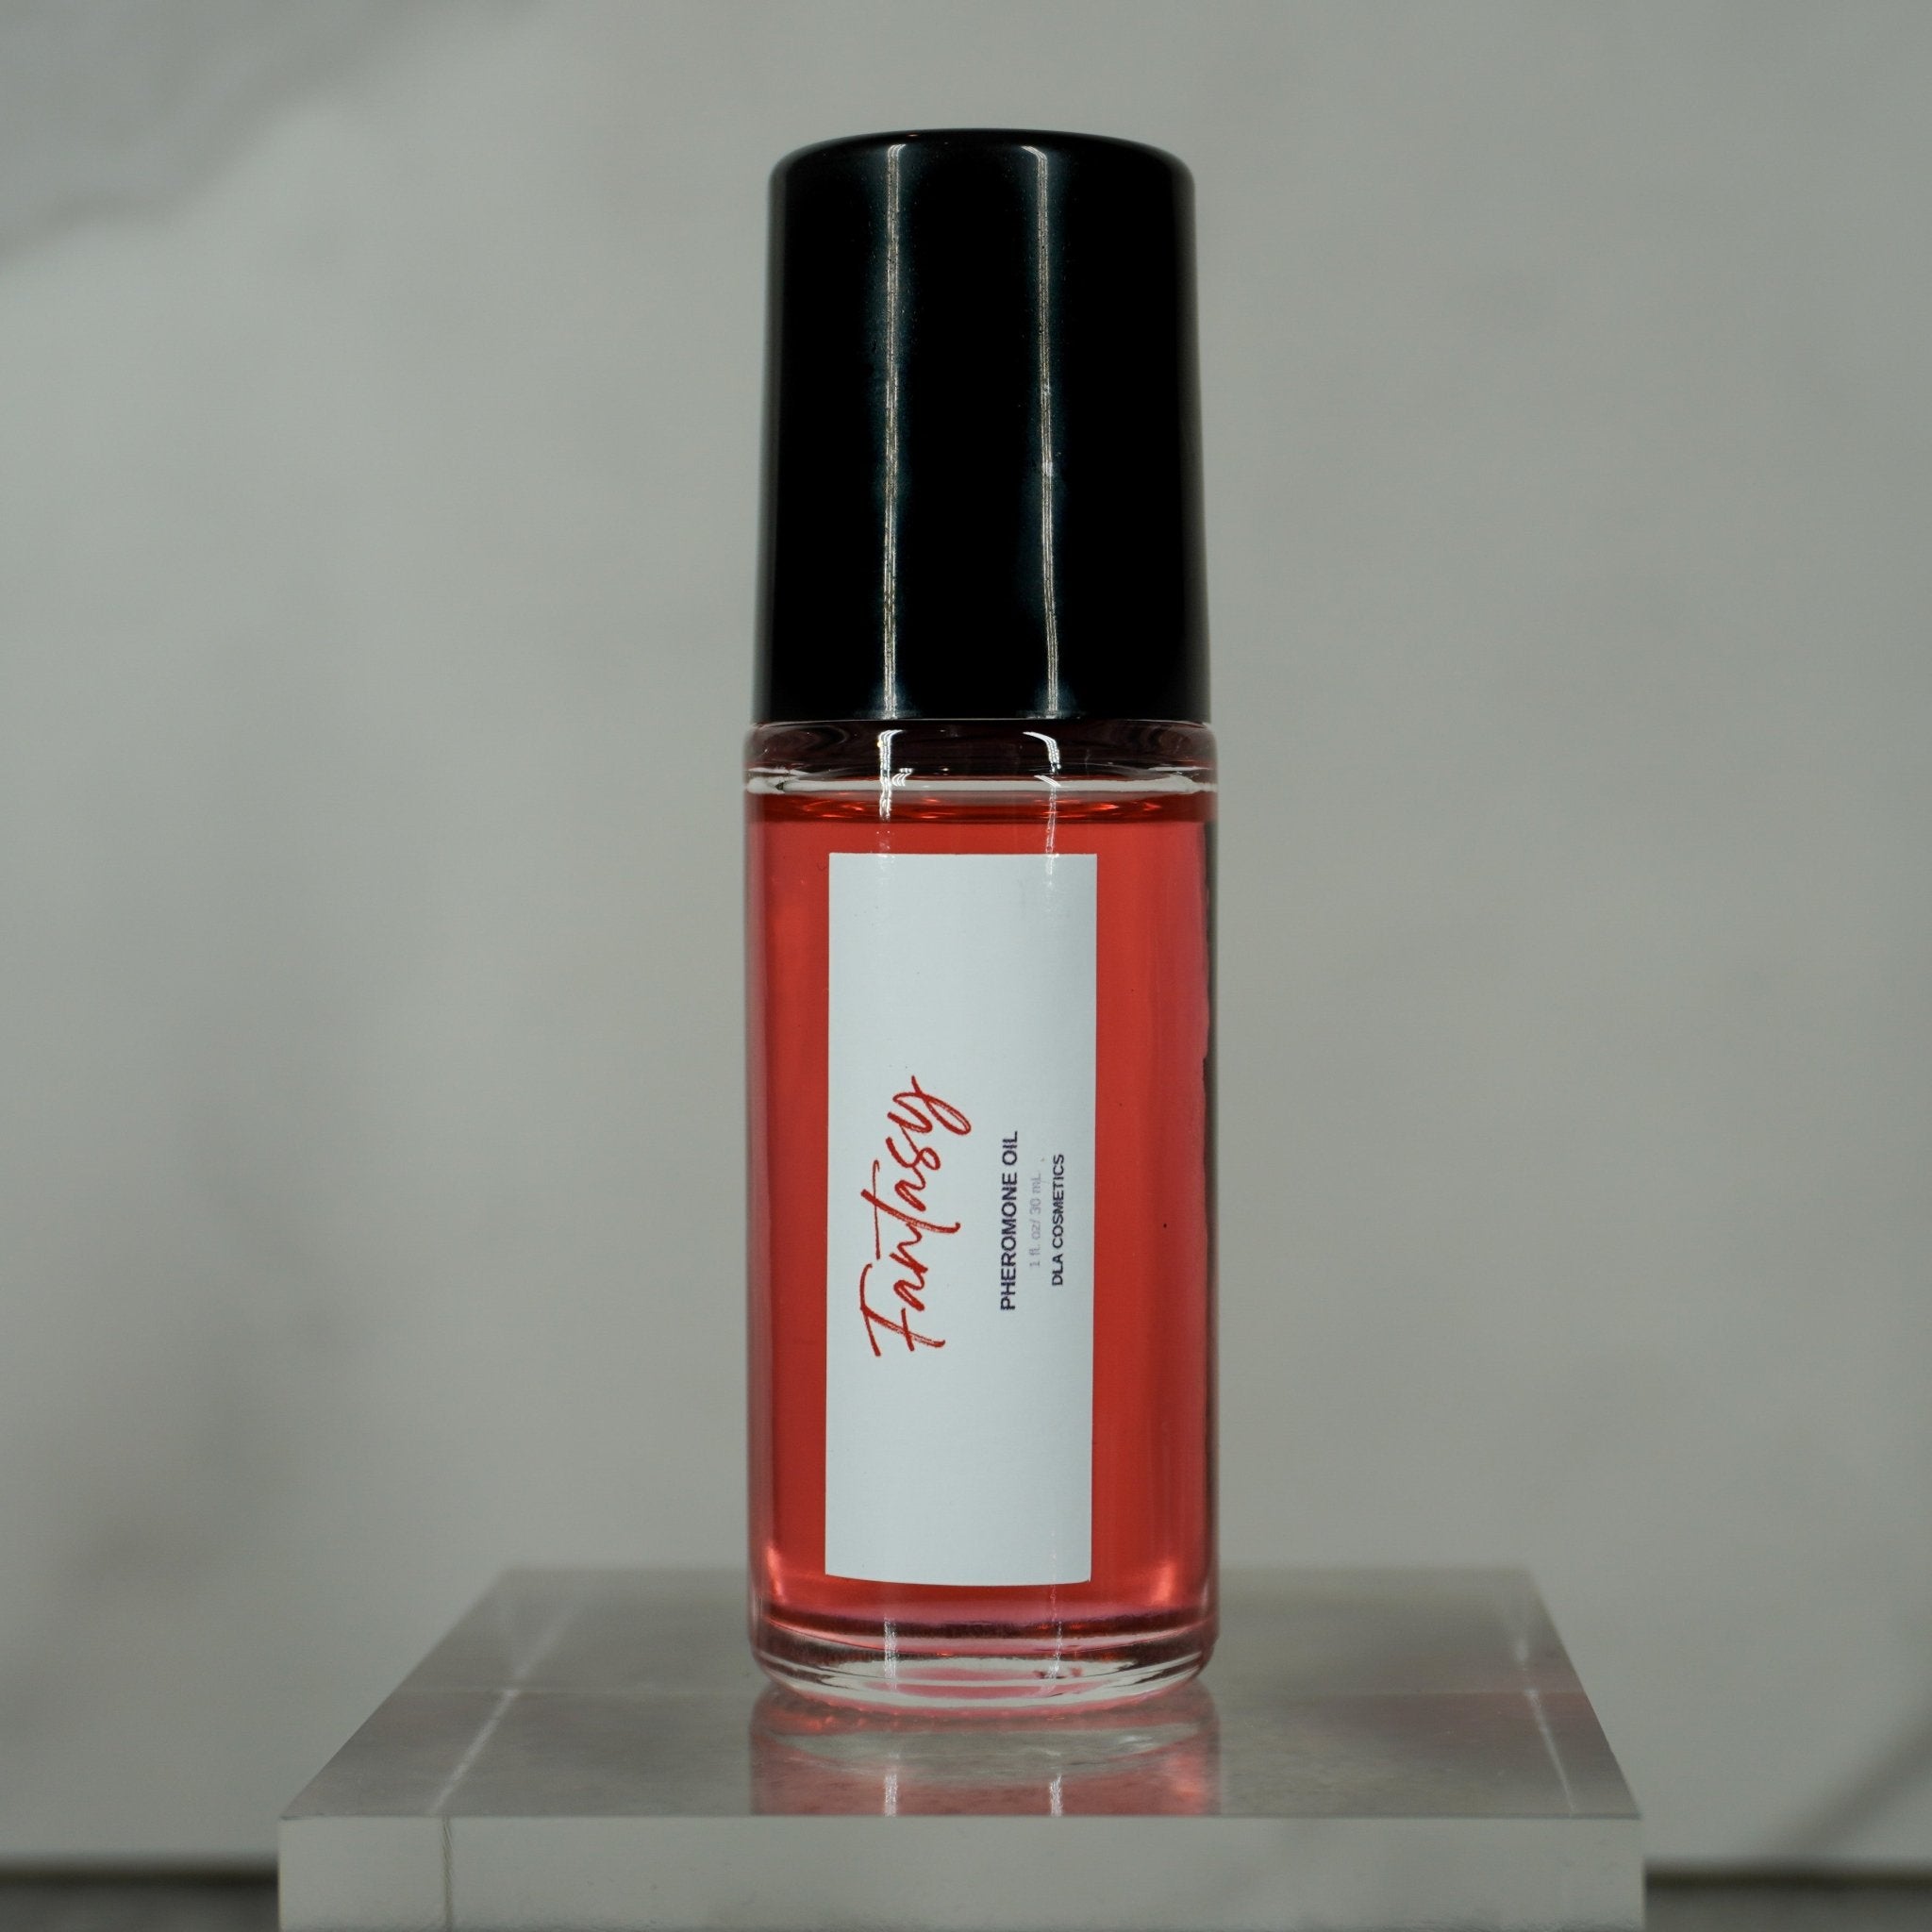 Pheromone Oil FANTASY PHEROMONE ROLL ON OIL - DLA Cosmetics- Pheromone roll on perfume